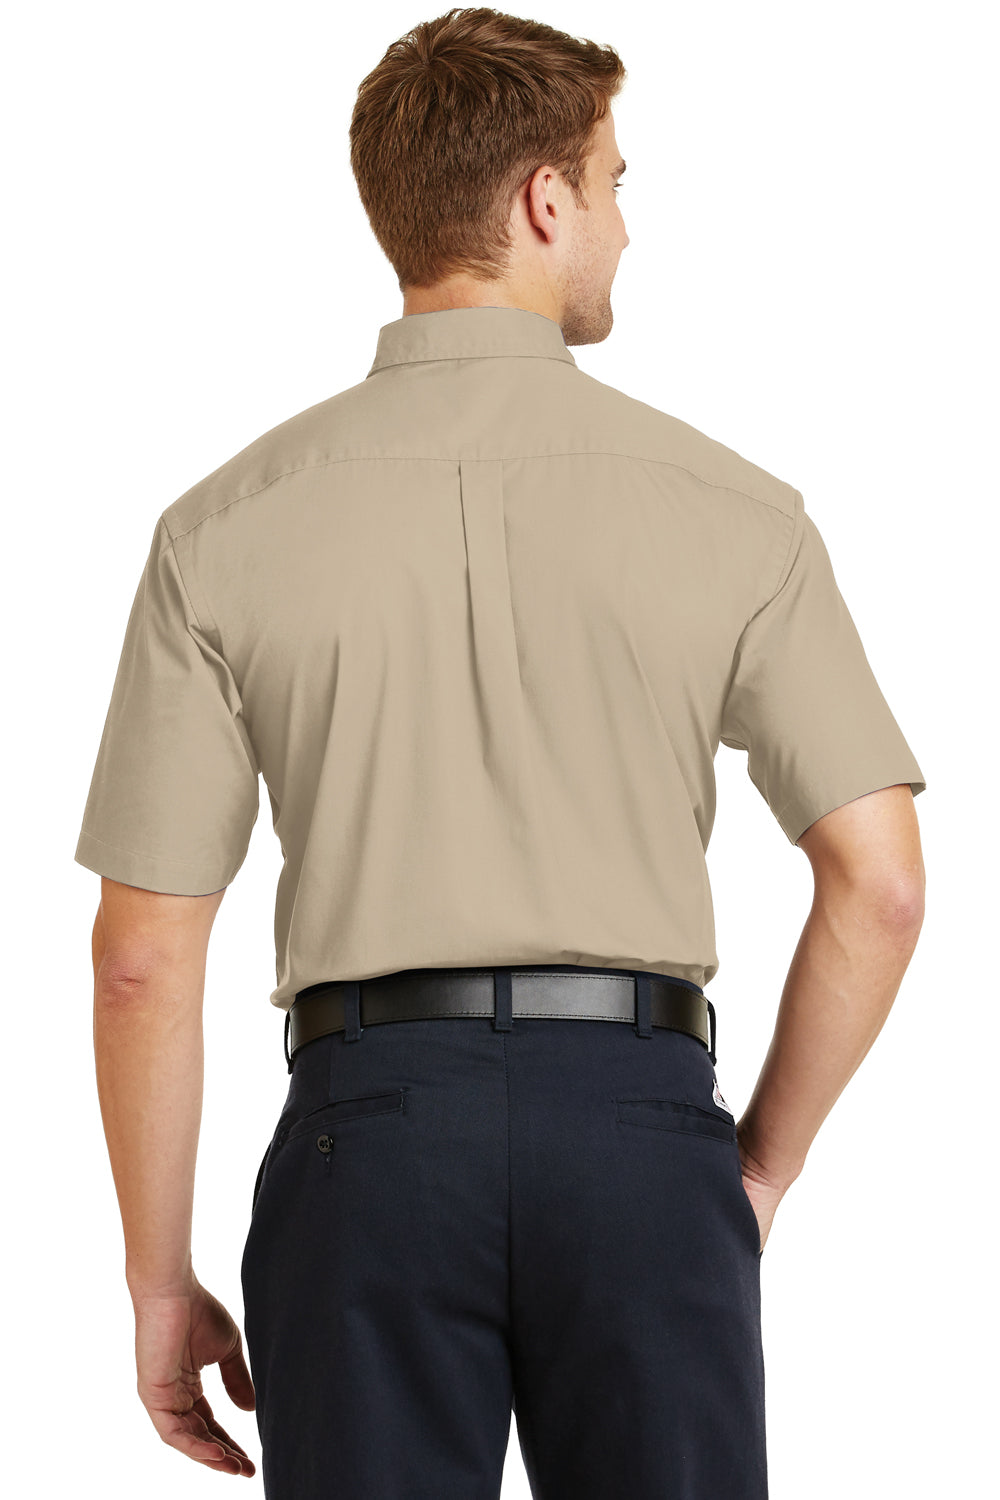 CornerStone SP18 Mens SuperPro Stain Resistant Short Sleeve Button Down Shirt w/ Pocket Stone Brown Back